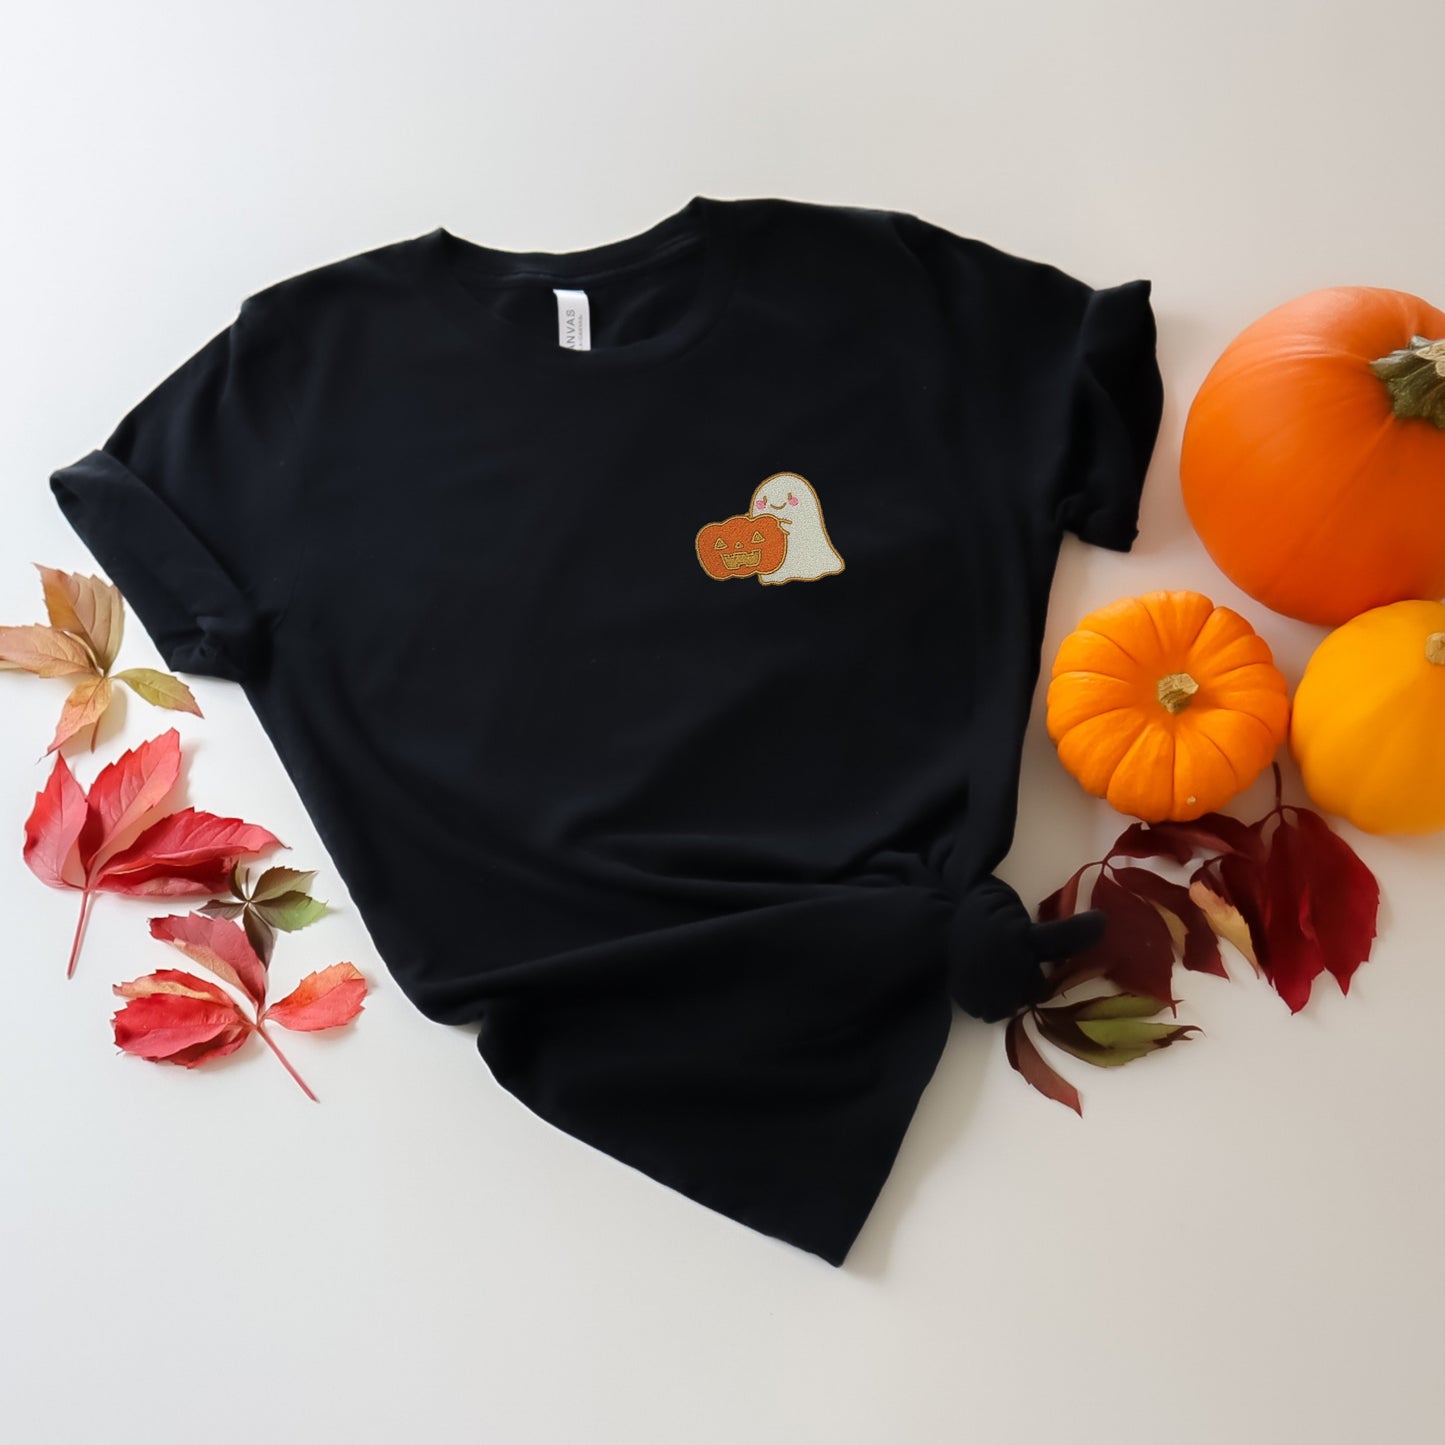 Cute Pumpkin Ghost Black Embroidered Tee